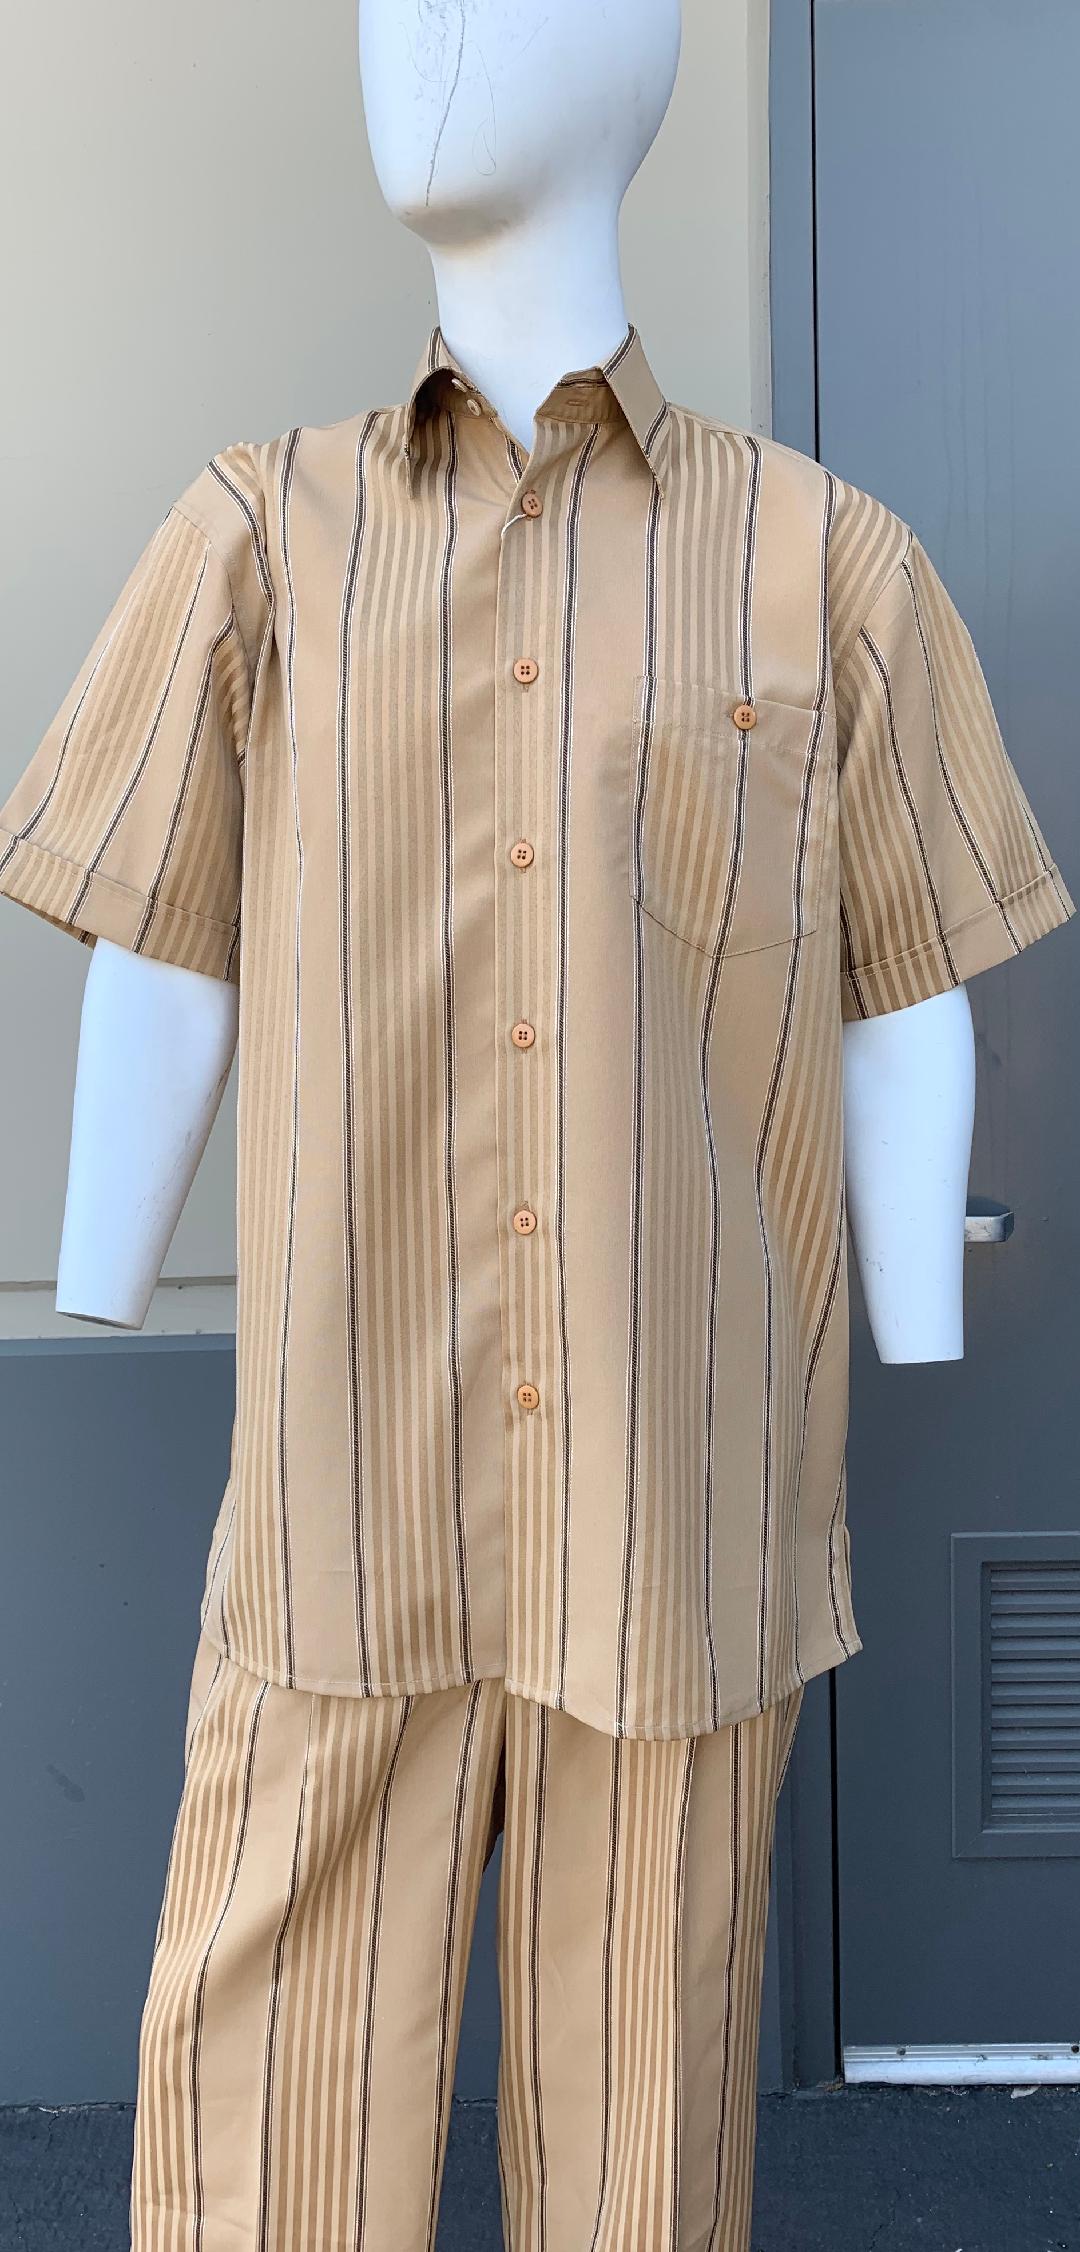 Lemongrass Stripes Short Sleeve 2pc Walking Suit Set - Gold